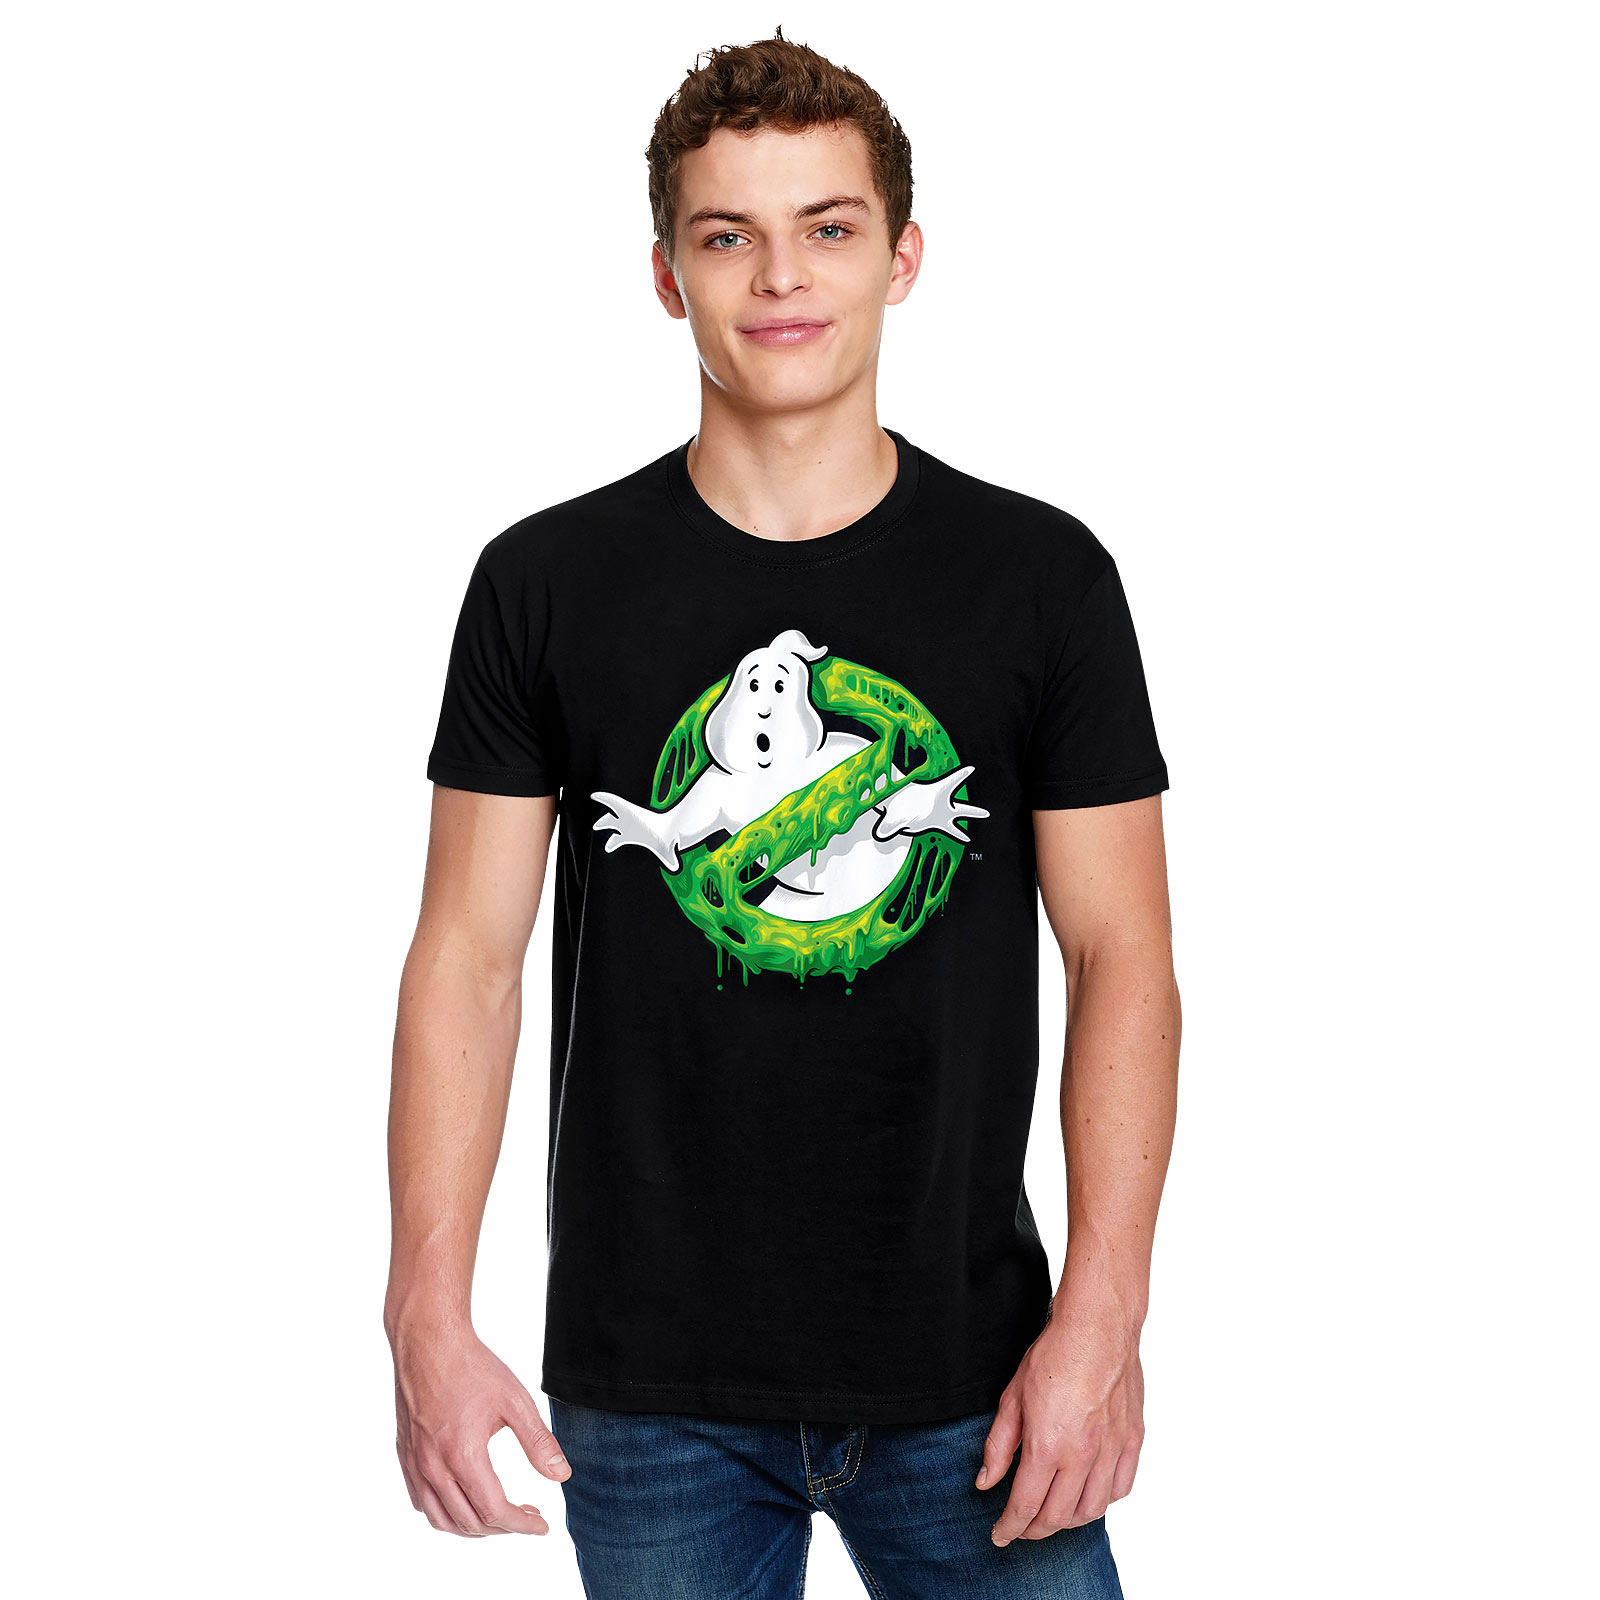 Ghostbusters - T-shirt logo Slime noir